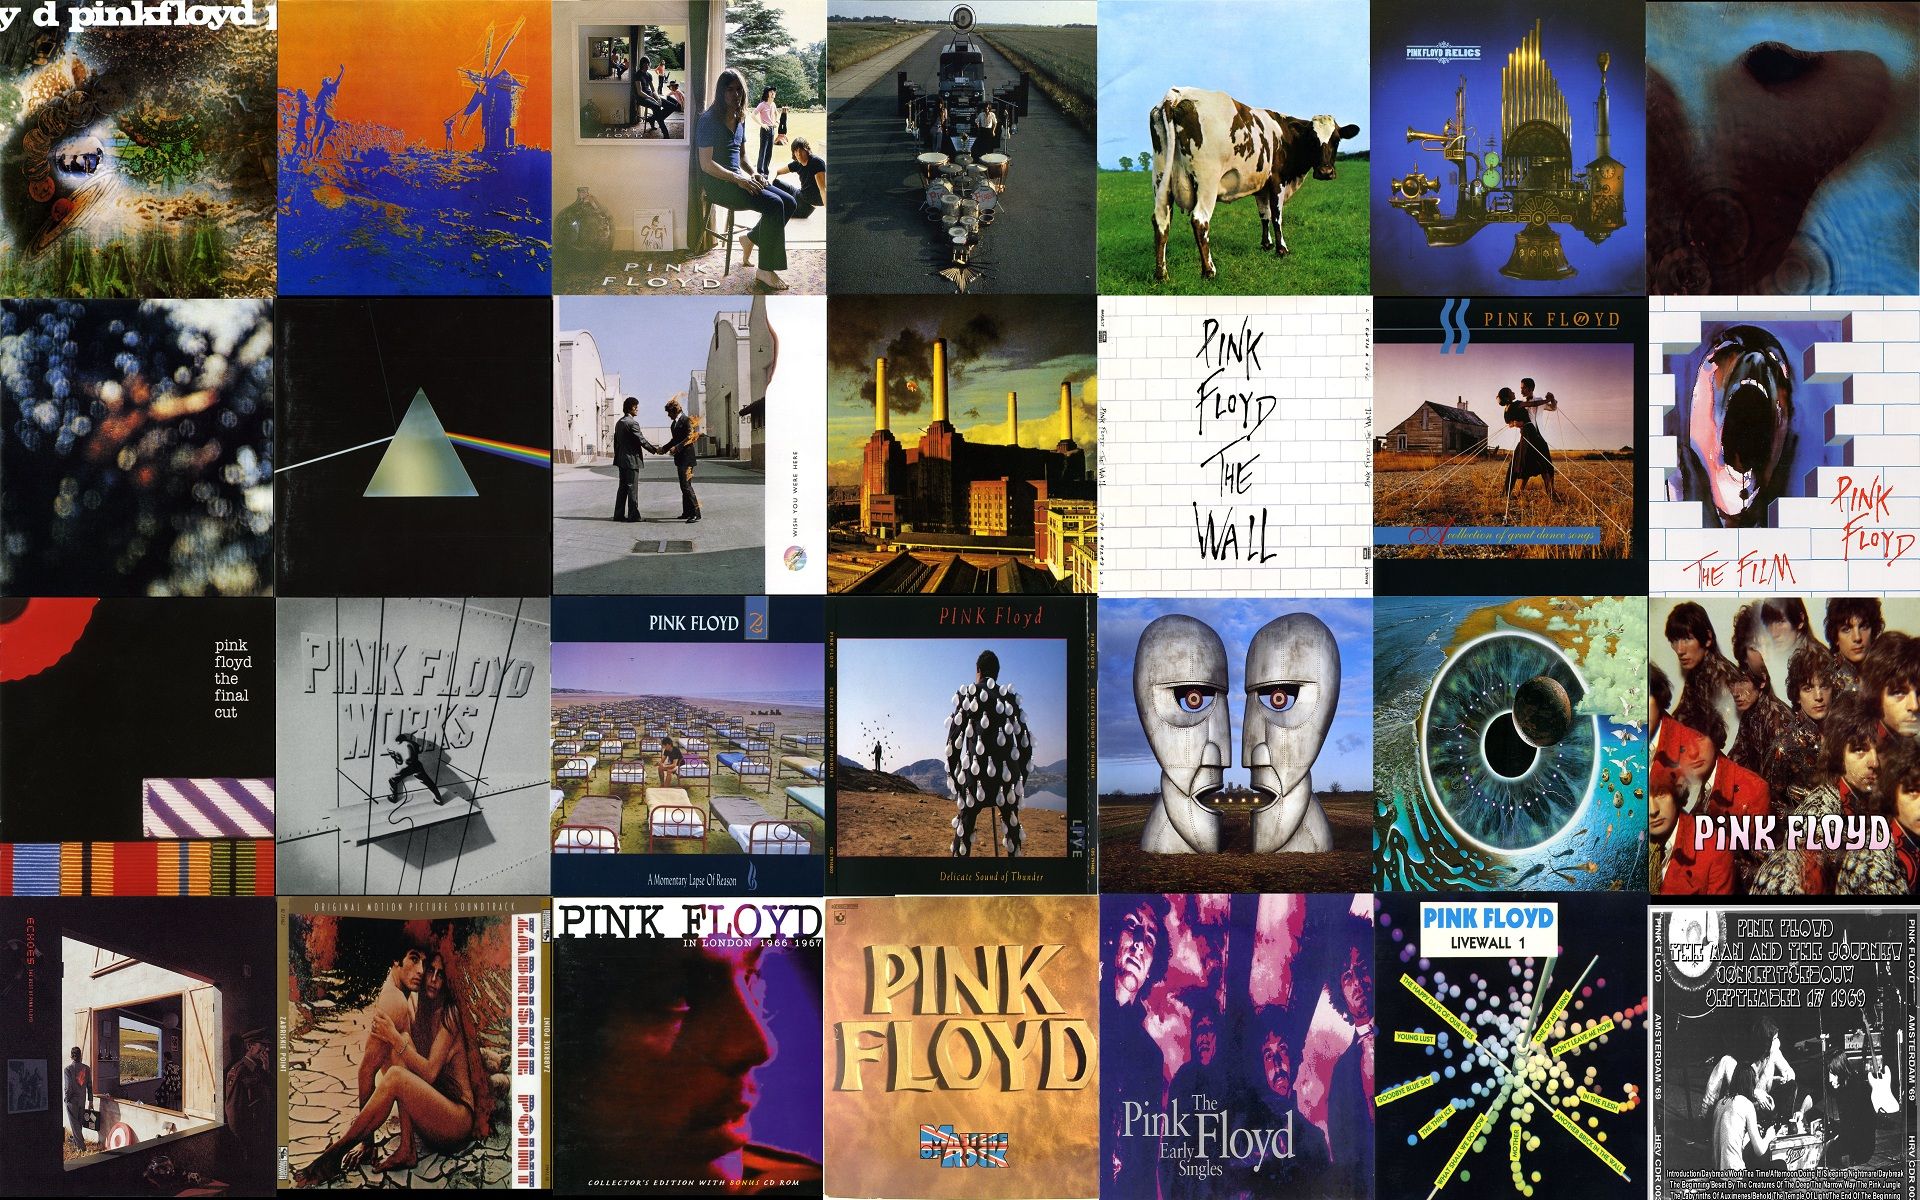 Pink Floyd Computer Wallpaper, Desktop Backgroundx1200. Pink floyd album covers, Pink floyd albums, Pink floyd music